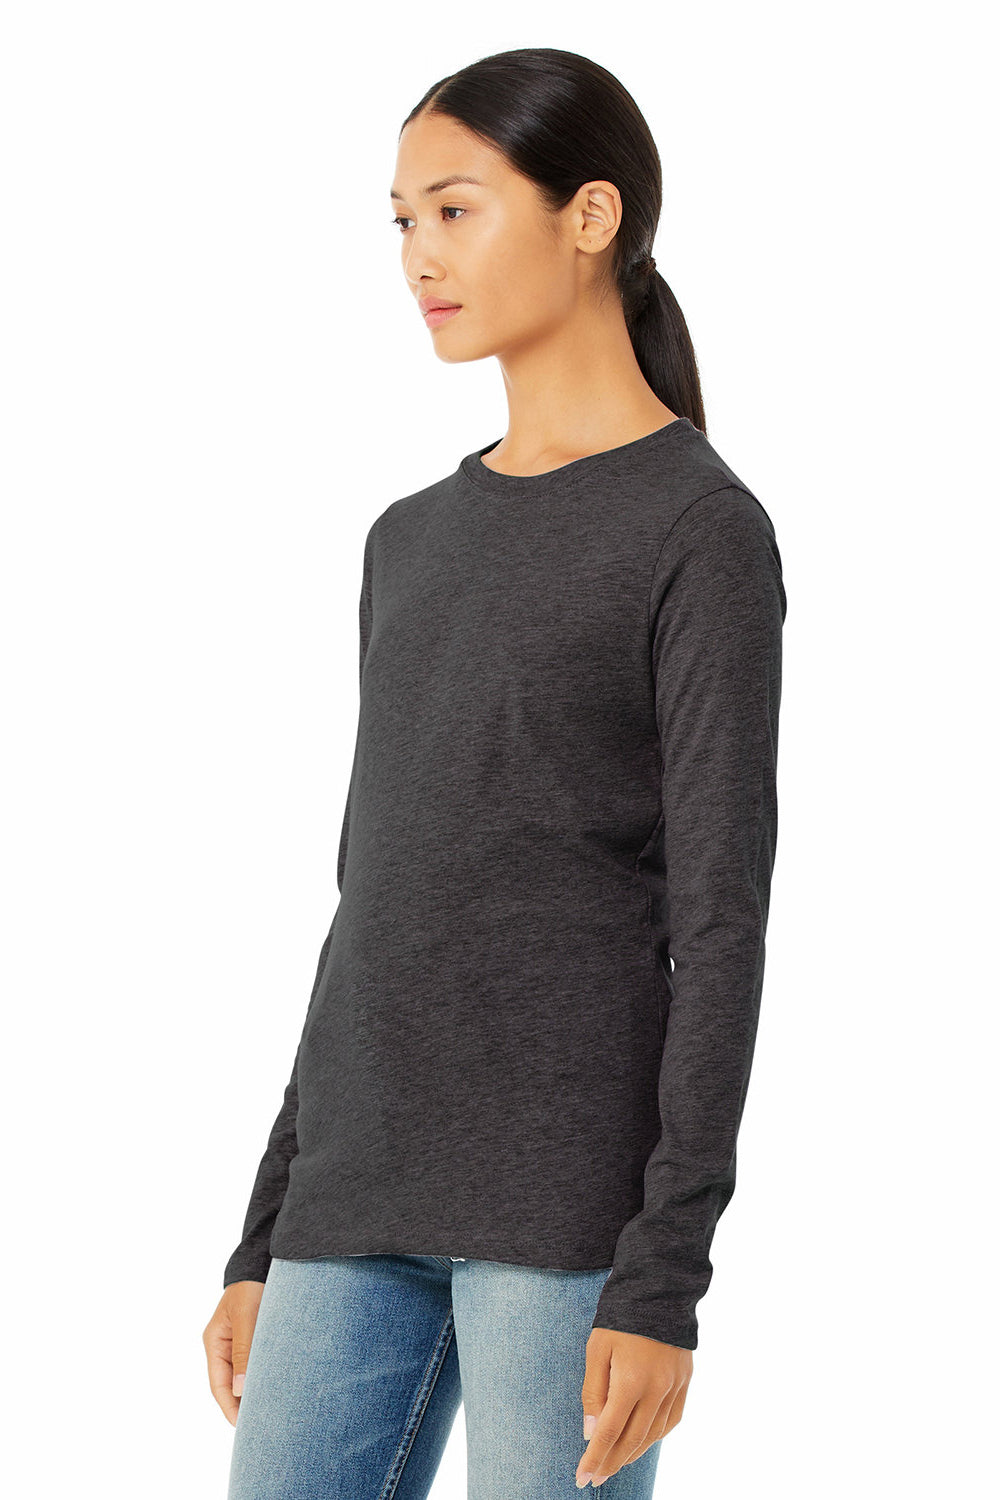 Bella + Canvas B6500/6500 Womens Jersey Long Sleeve Crewneck T-Shirt Heather Dark Grey Model 3Q